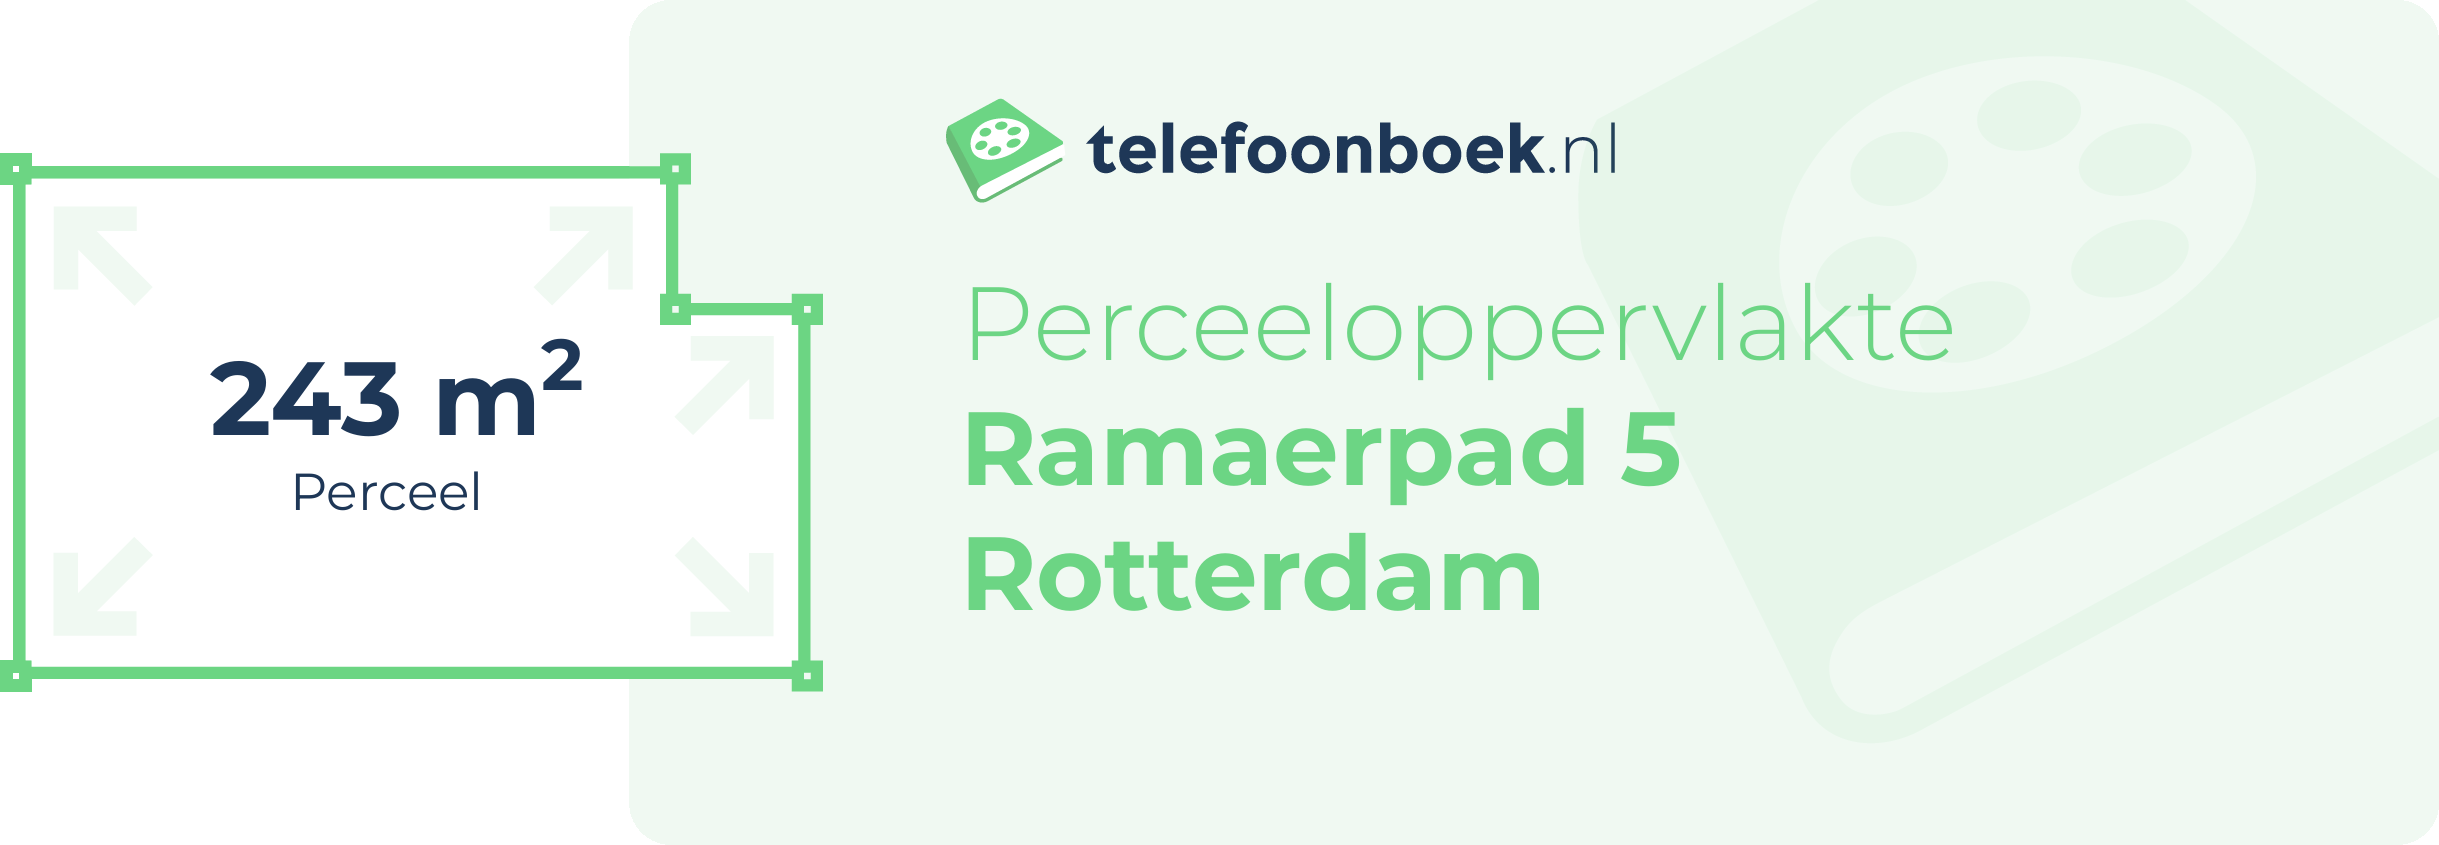 Perceeloppervlakte Ramaerpad 5 Rotterdam